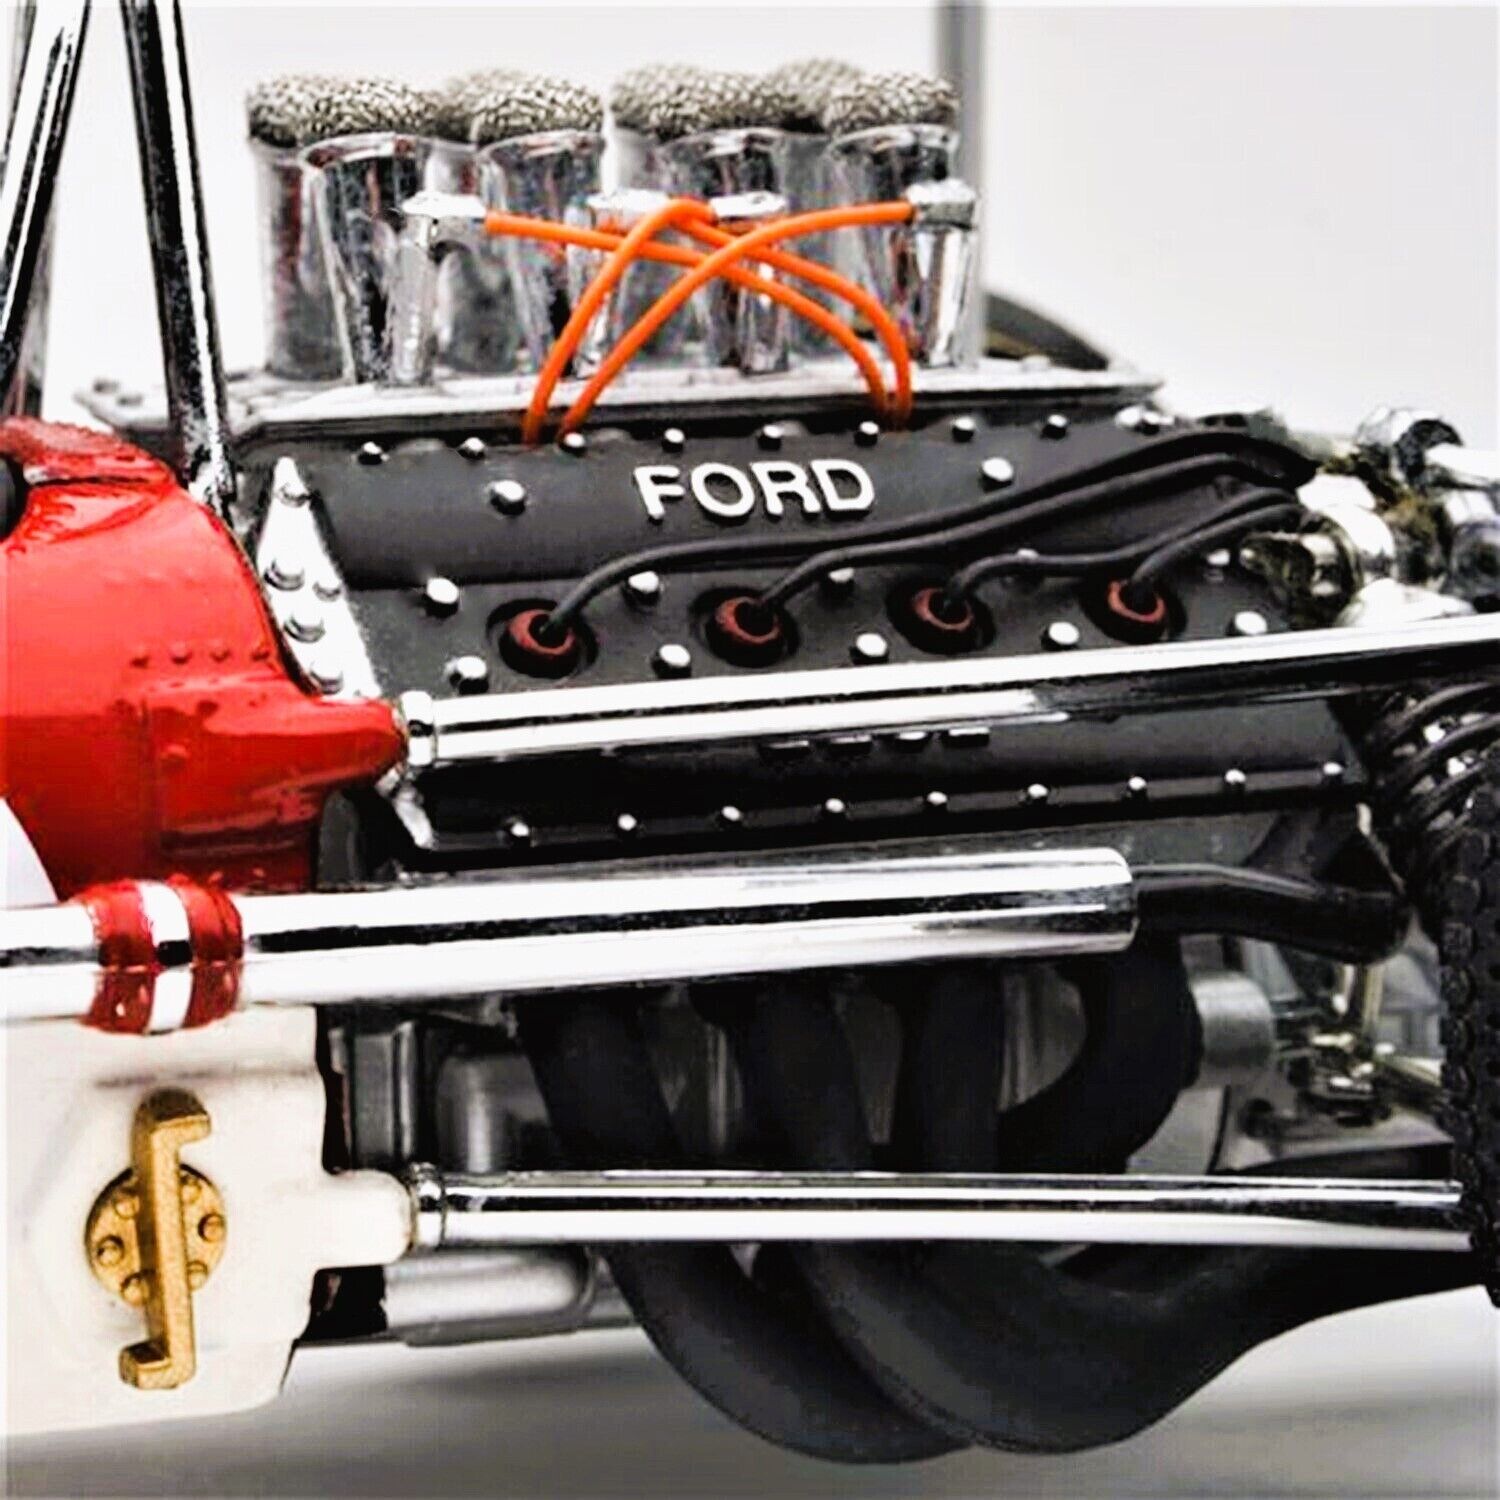 Ford V8Engine in1967 Race Car w/F1GP Wheel Rims 1:18SCALE CUSTOM METAL MODEL1969